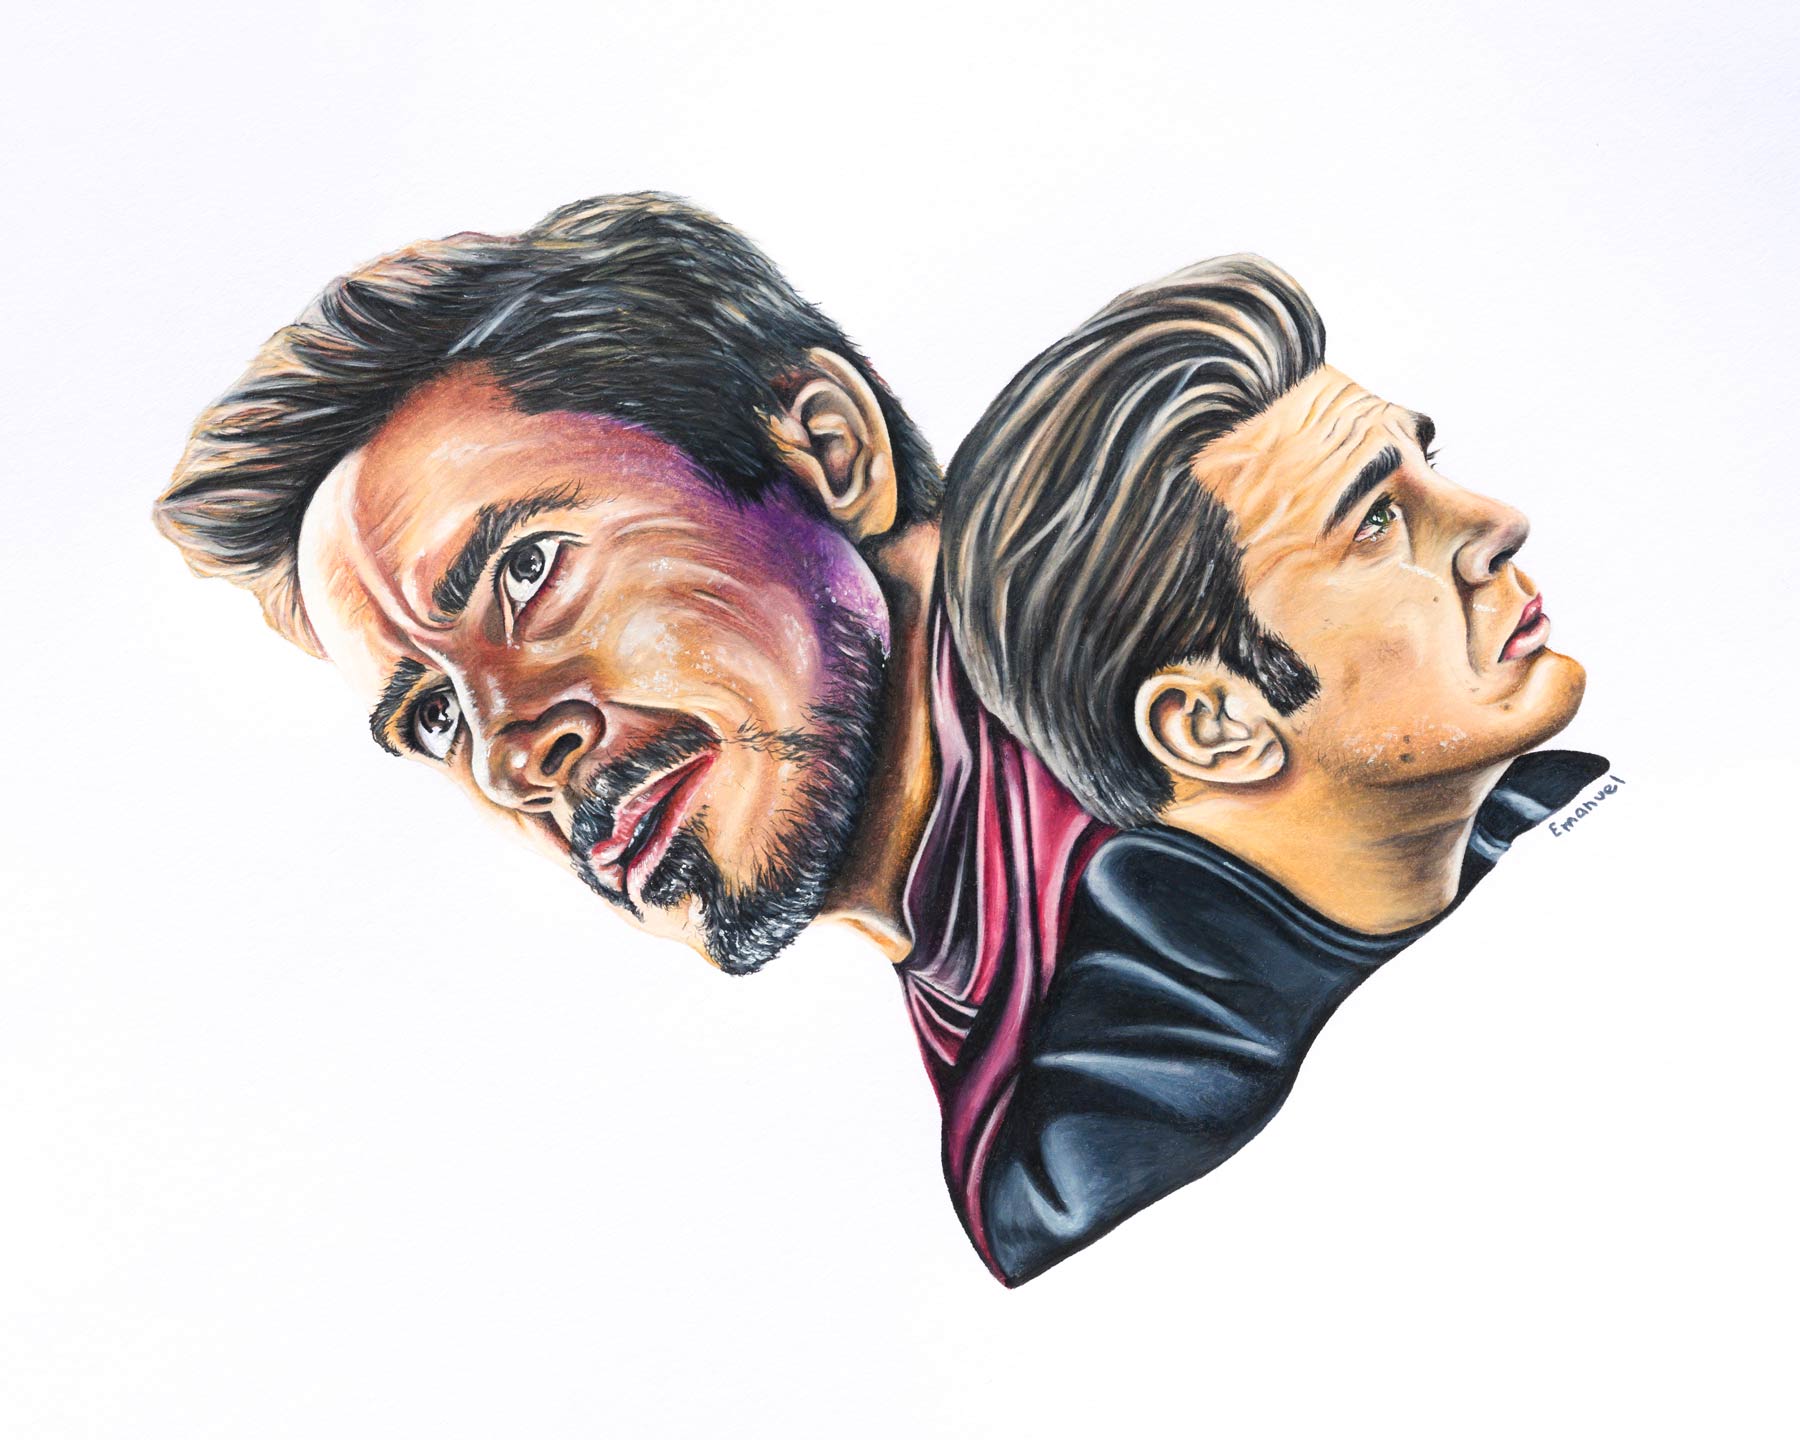 My Tony Stark Drawings - Tony Stark in a hoodie (Iron Man 2) - Wattpad